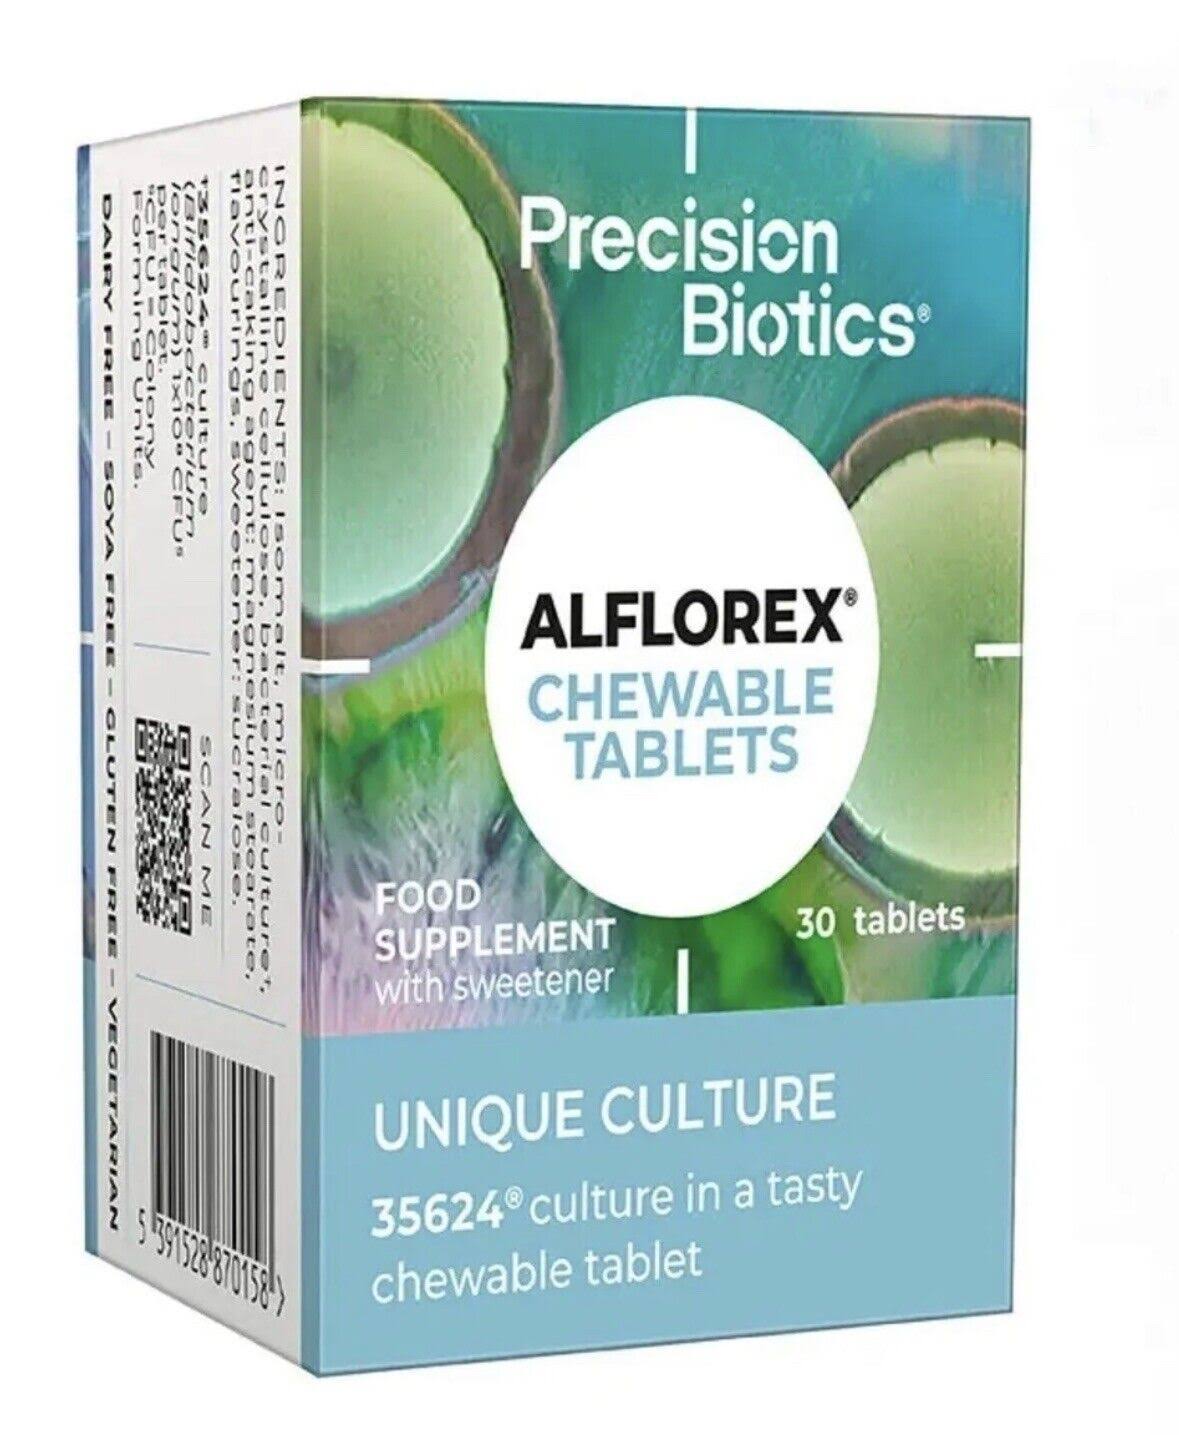 Alflorex PrecisionBiotics 30 Chwable Tablets